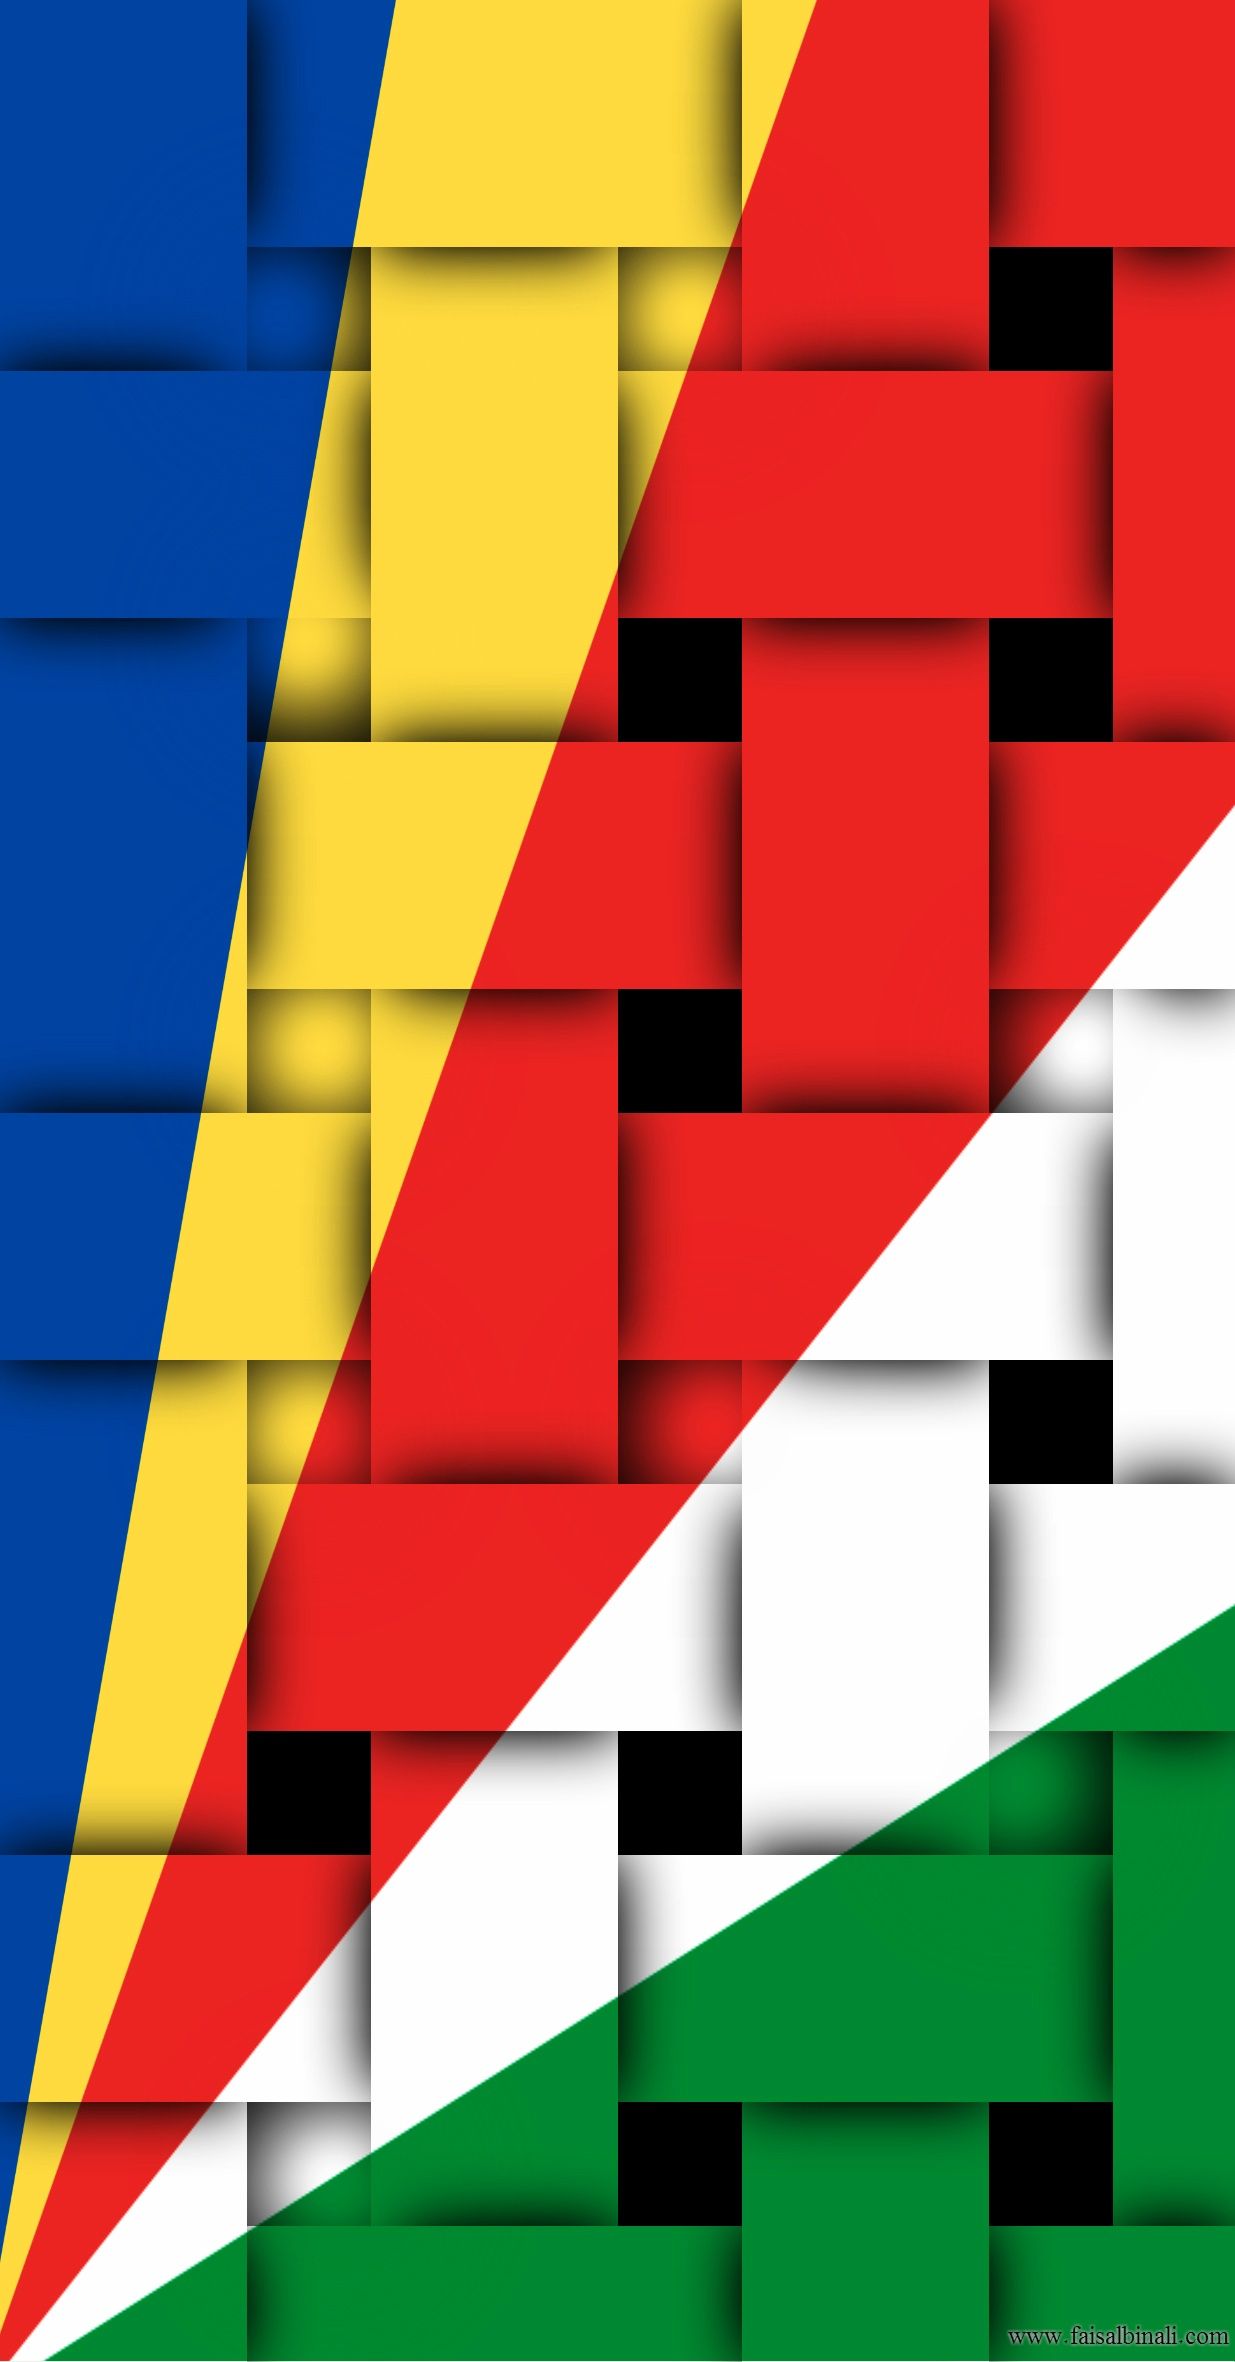 Seychelles Flags Artwork Wallpaper For Smartphones Tablets